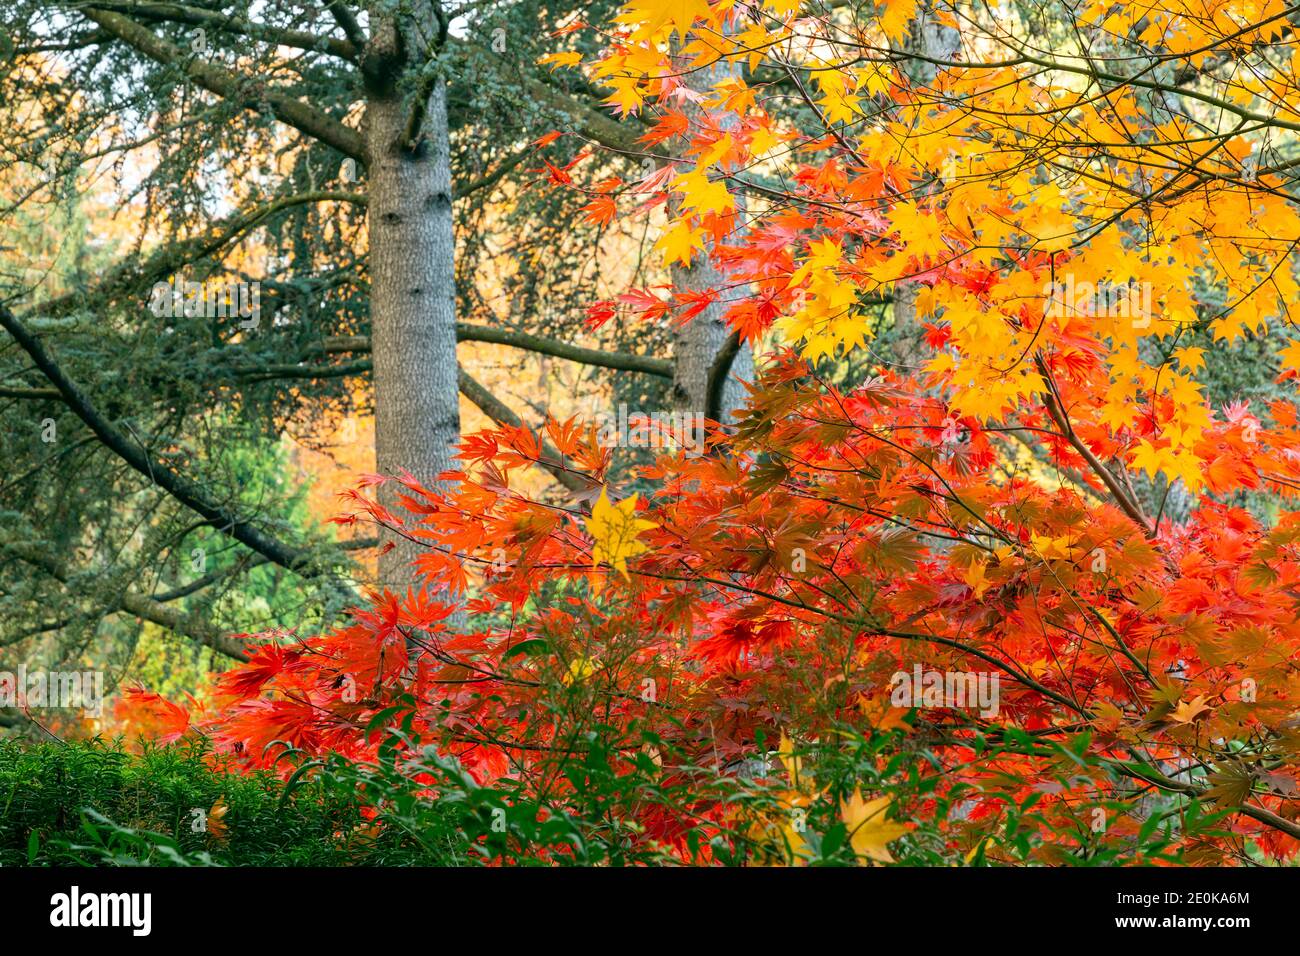 WA18938-00...WASHINGTON - Contrasting fall colored maple leaves at Kubota Garden, a Seattle city park. Stock Photo